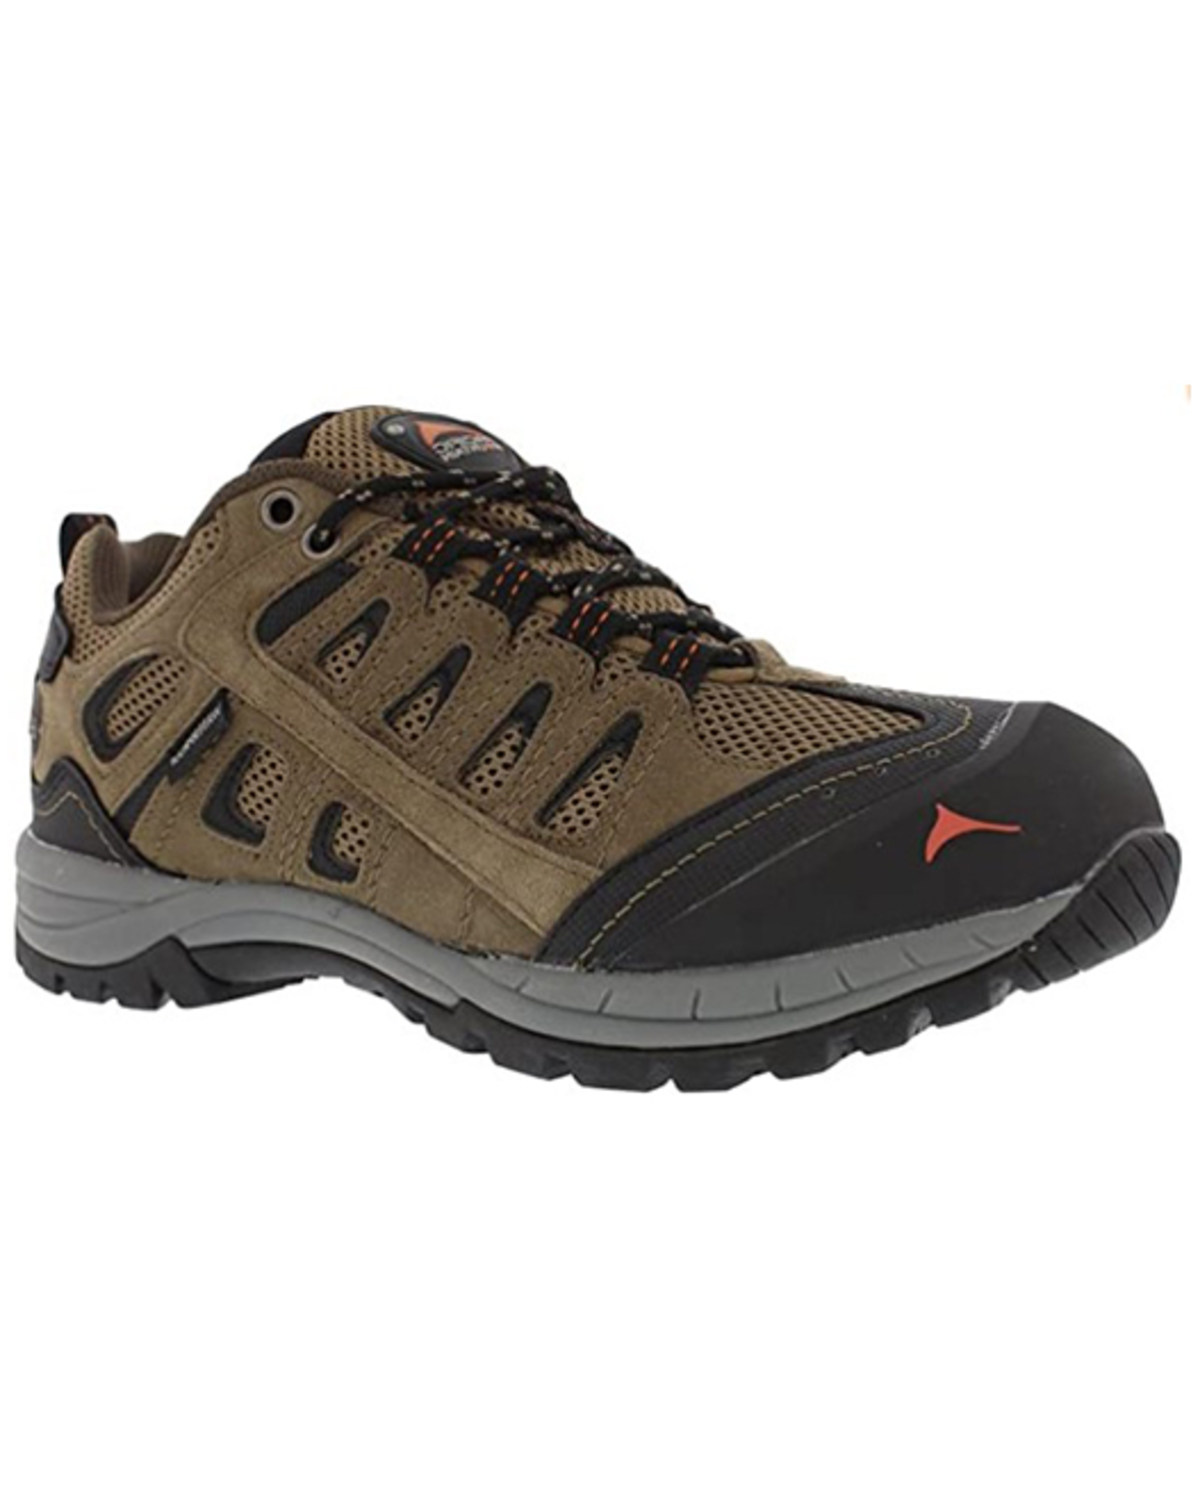 Pacific Mountain Men's Sanford Waterproof Hiking Shoes - Soft Toe